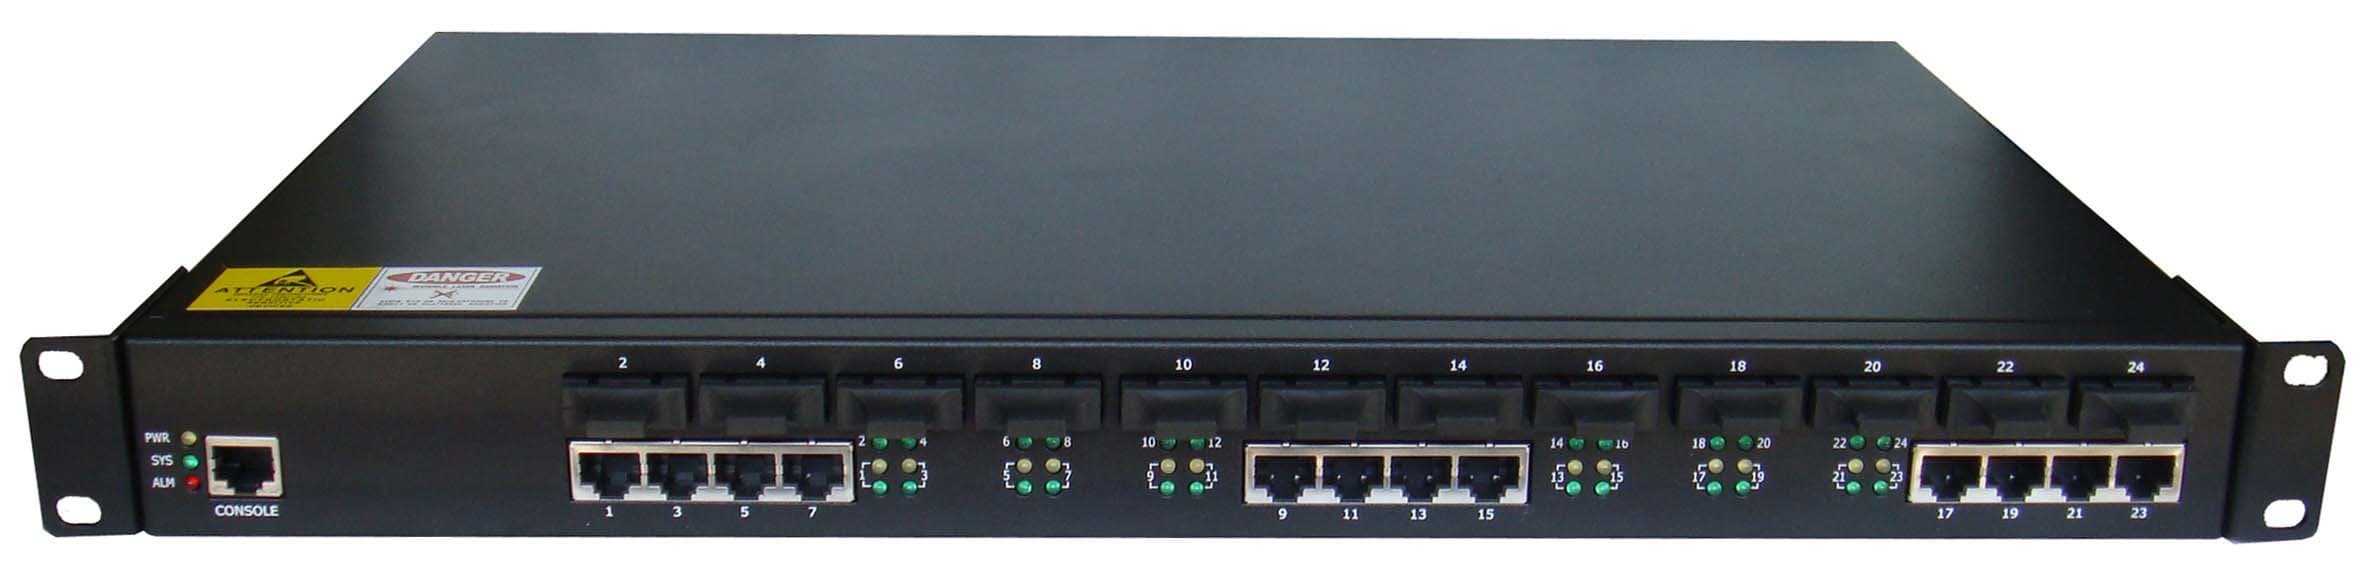 12F+12 Smart Optical Ethernet Switch